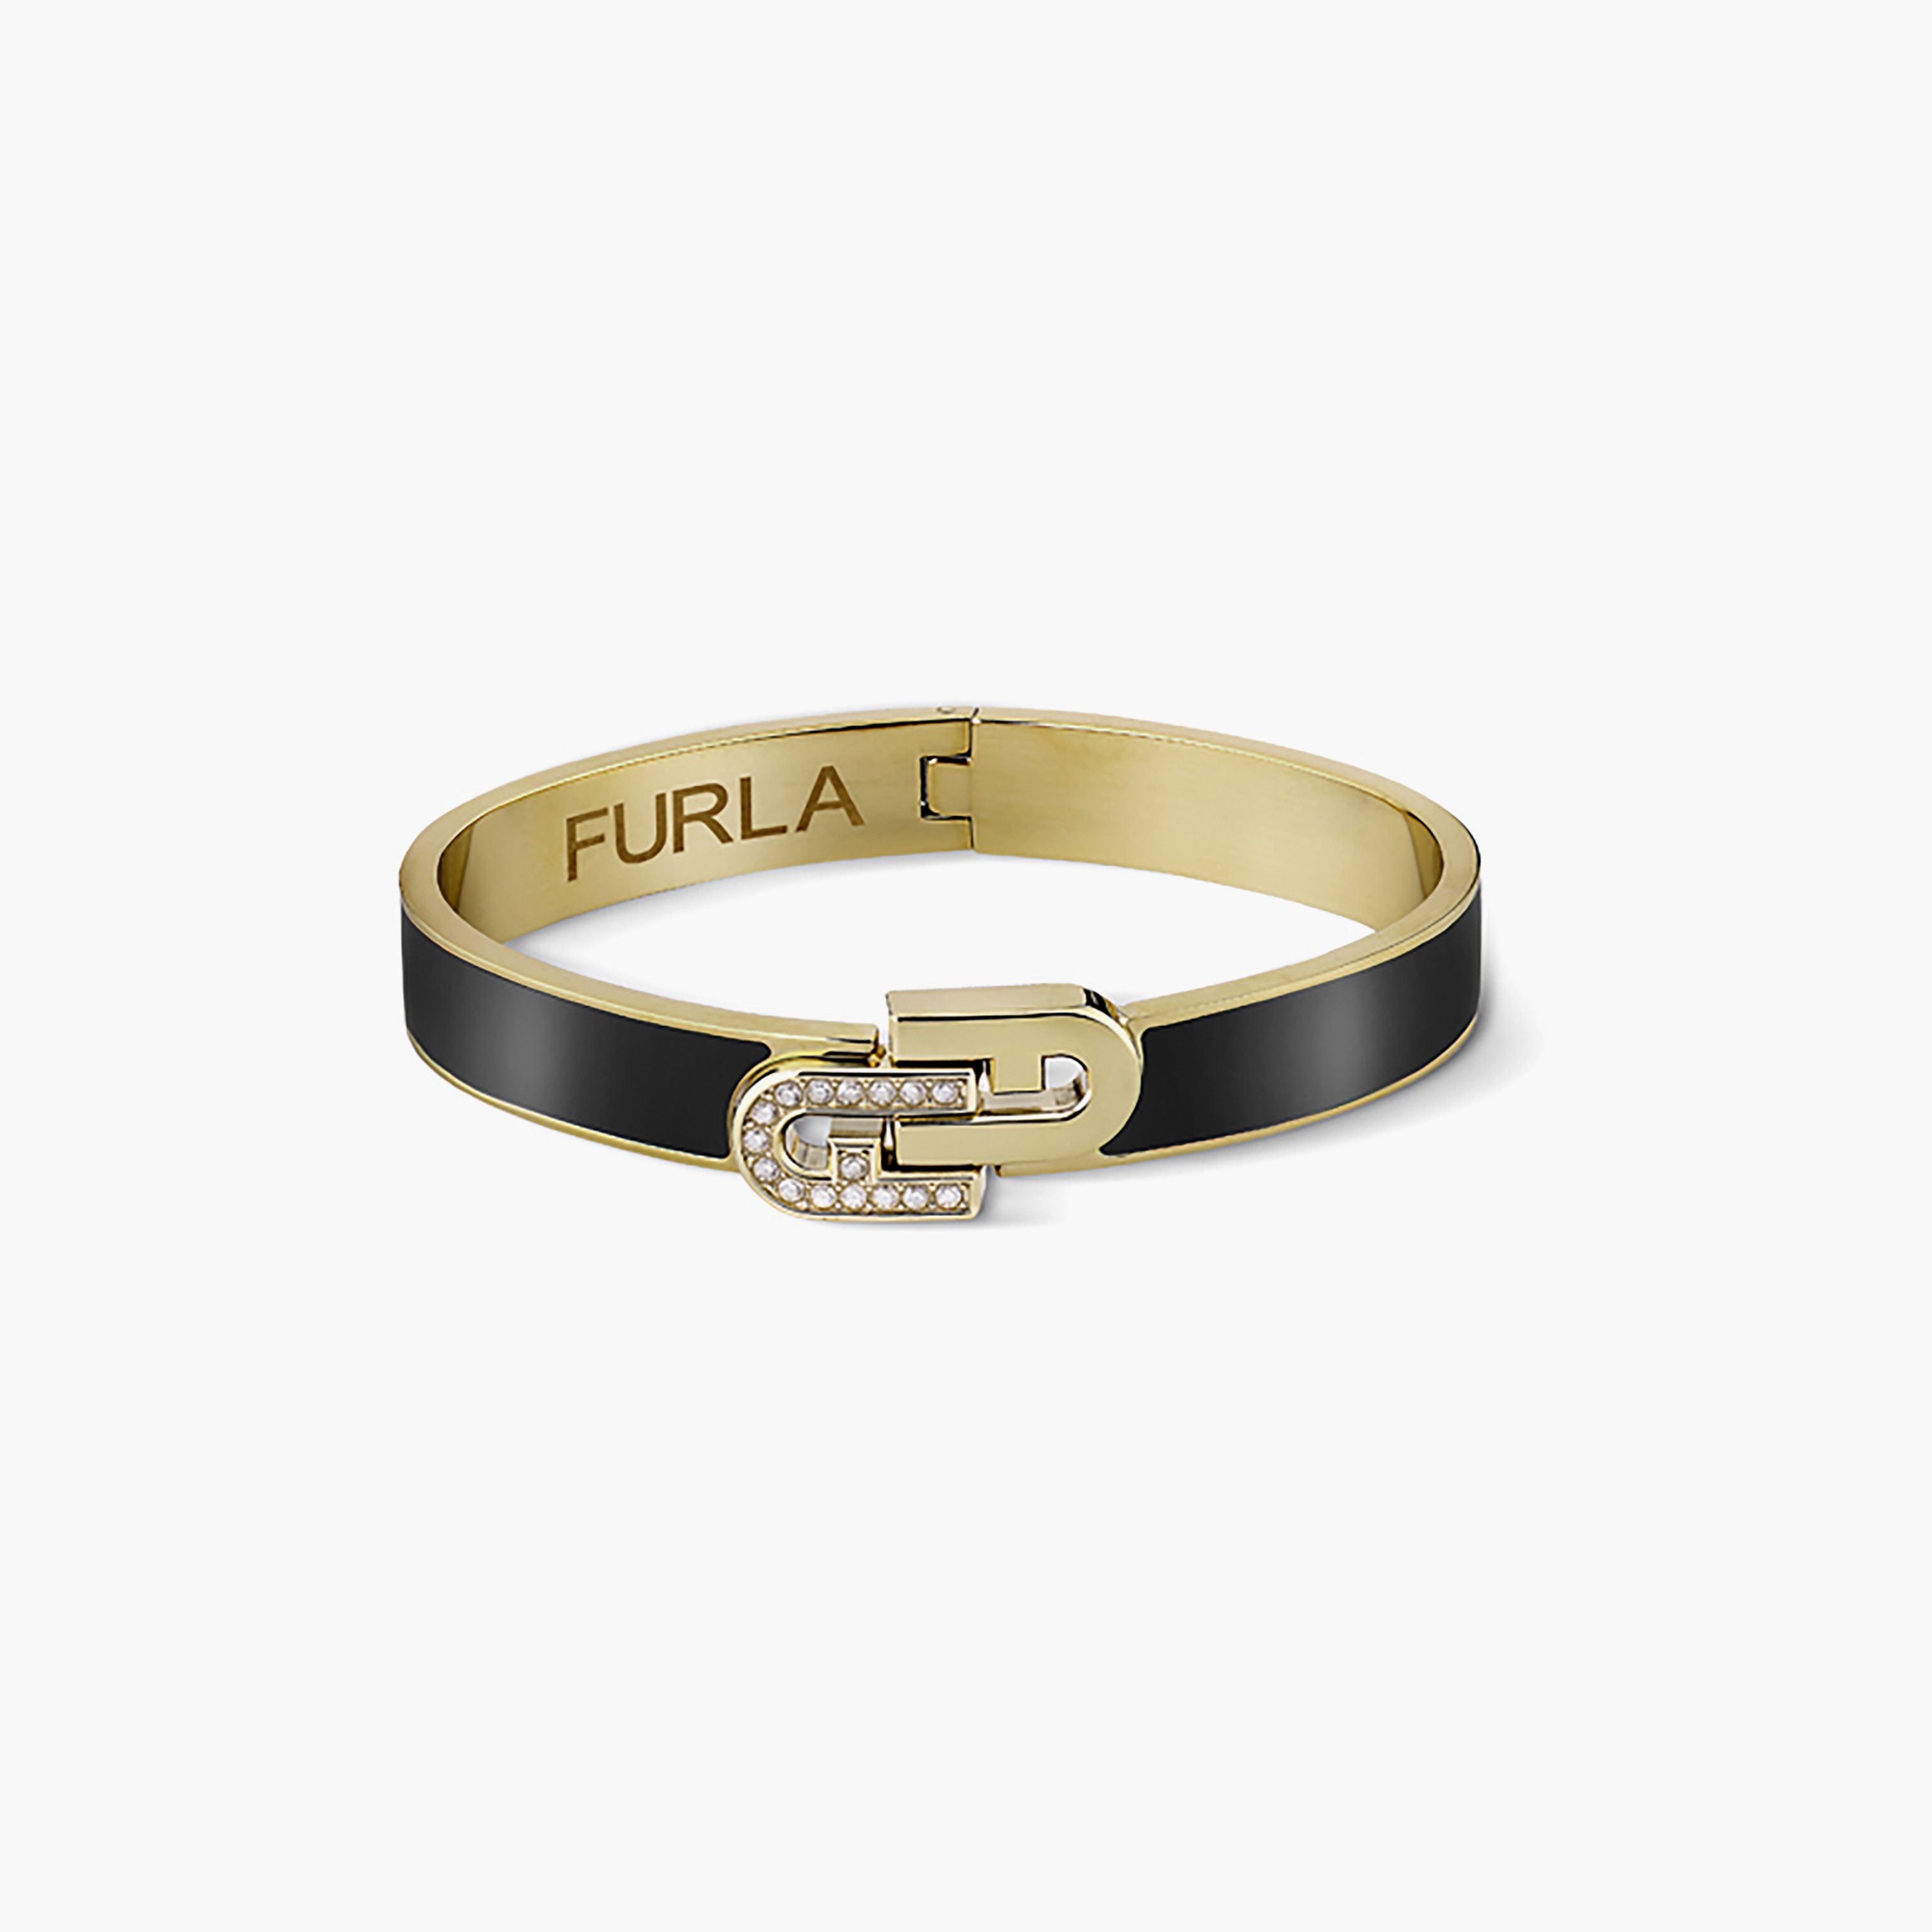 Buy Women's Furla Arch Double Women's Gold & Black Embellished